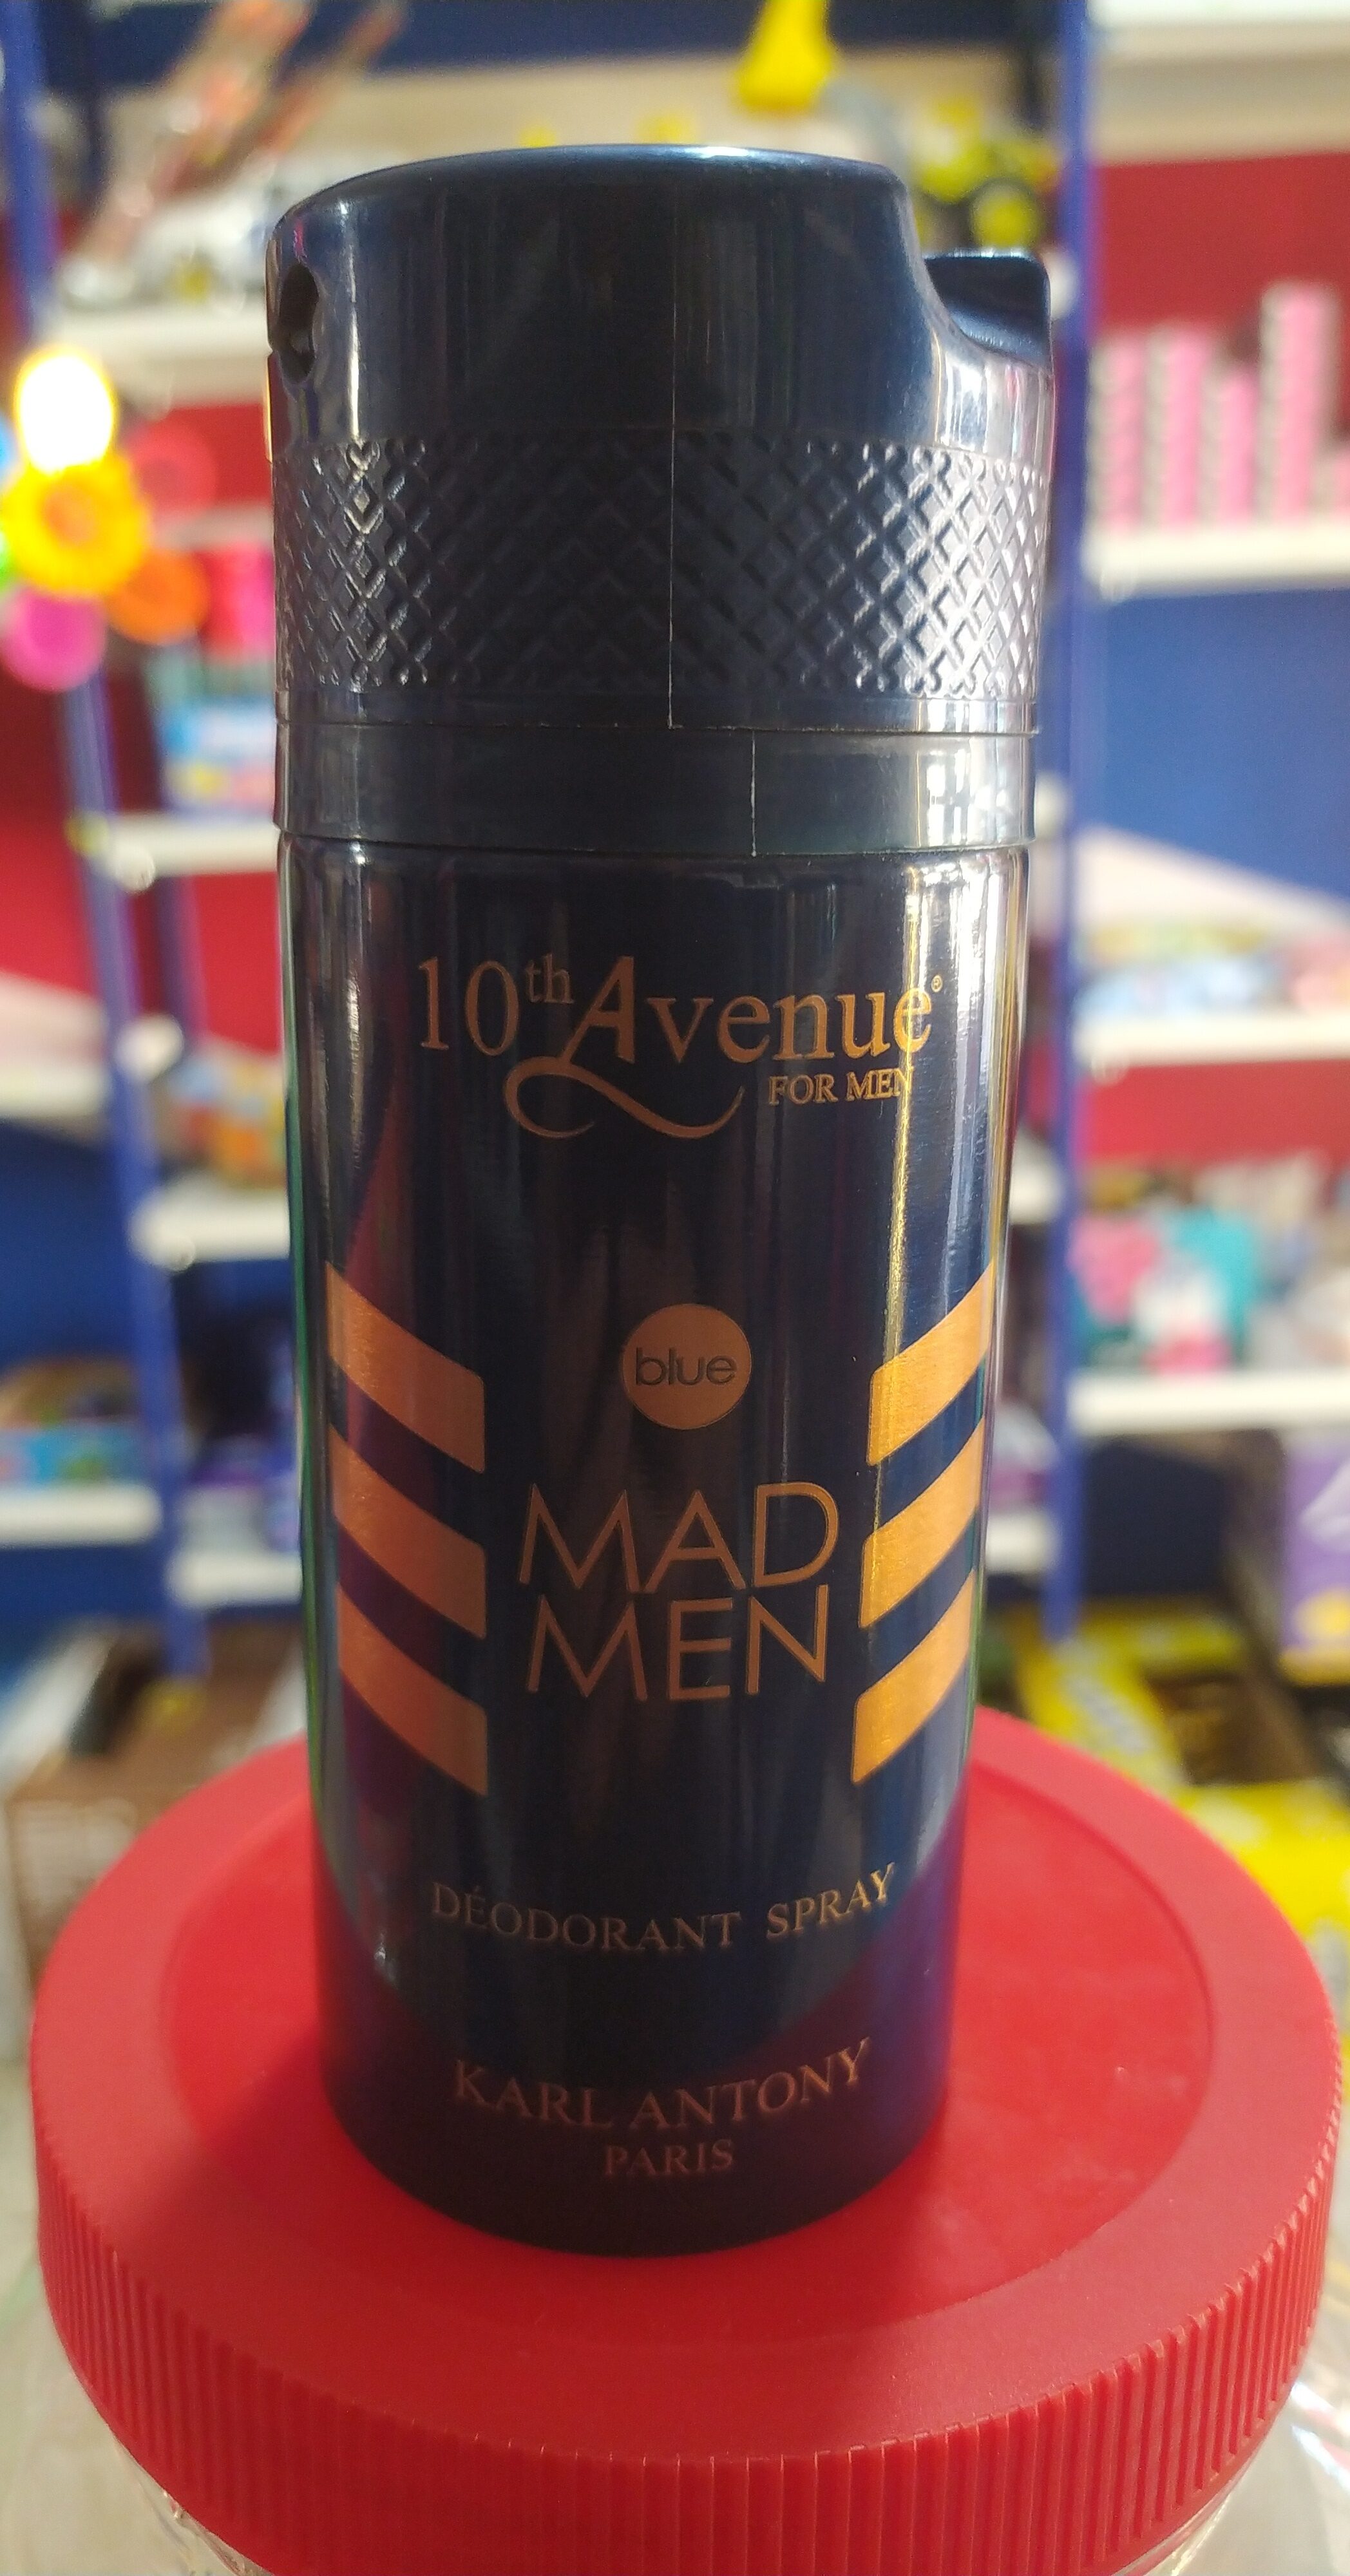 10th avenue Mad man - Product - en